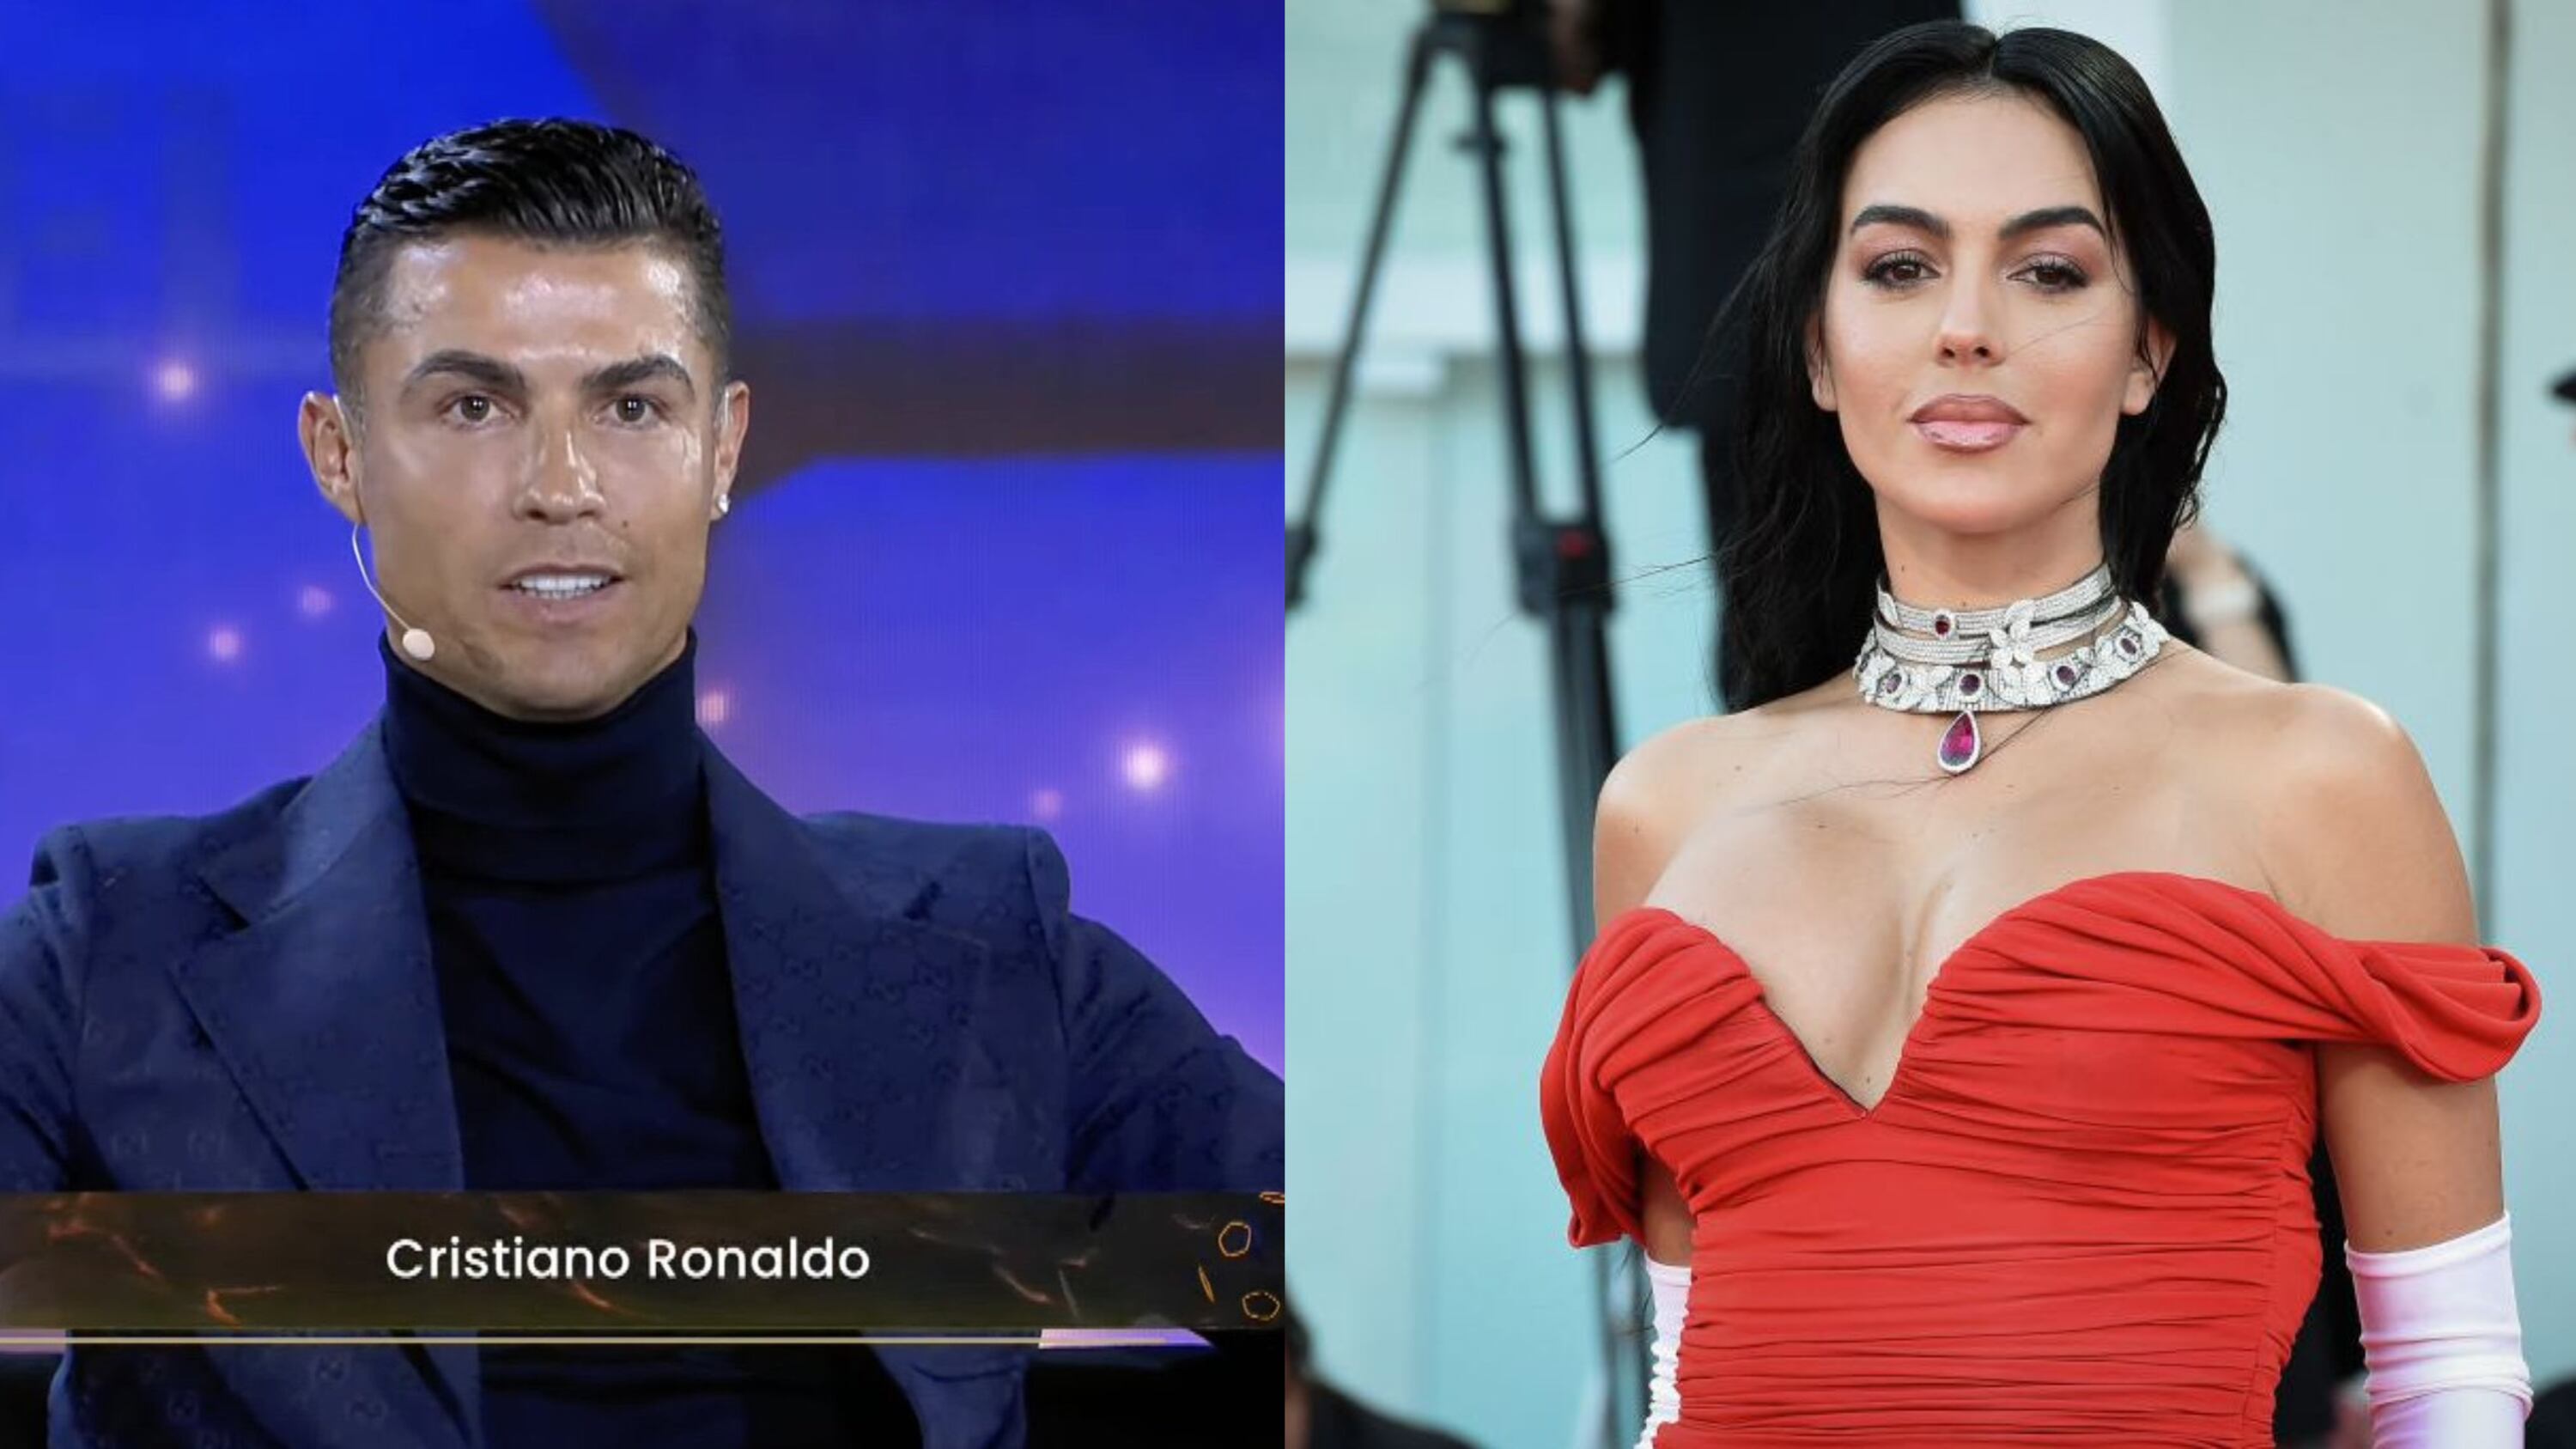 Although Ronaldo won awards, Georgina's shocking dress that stole the show